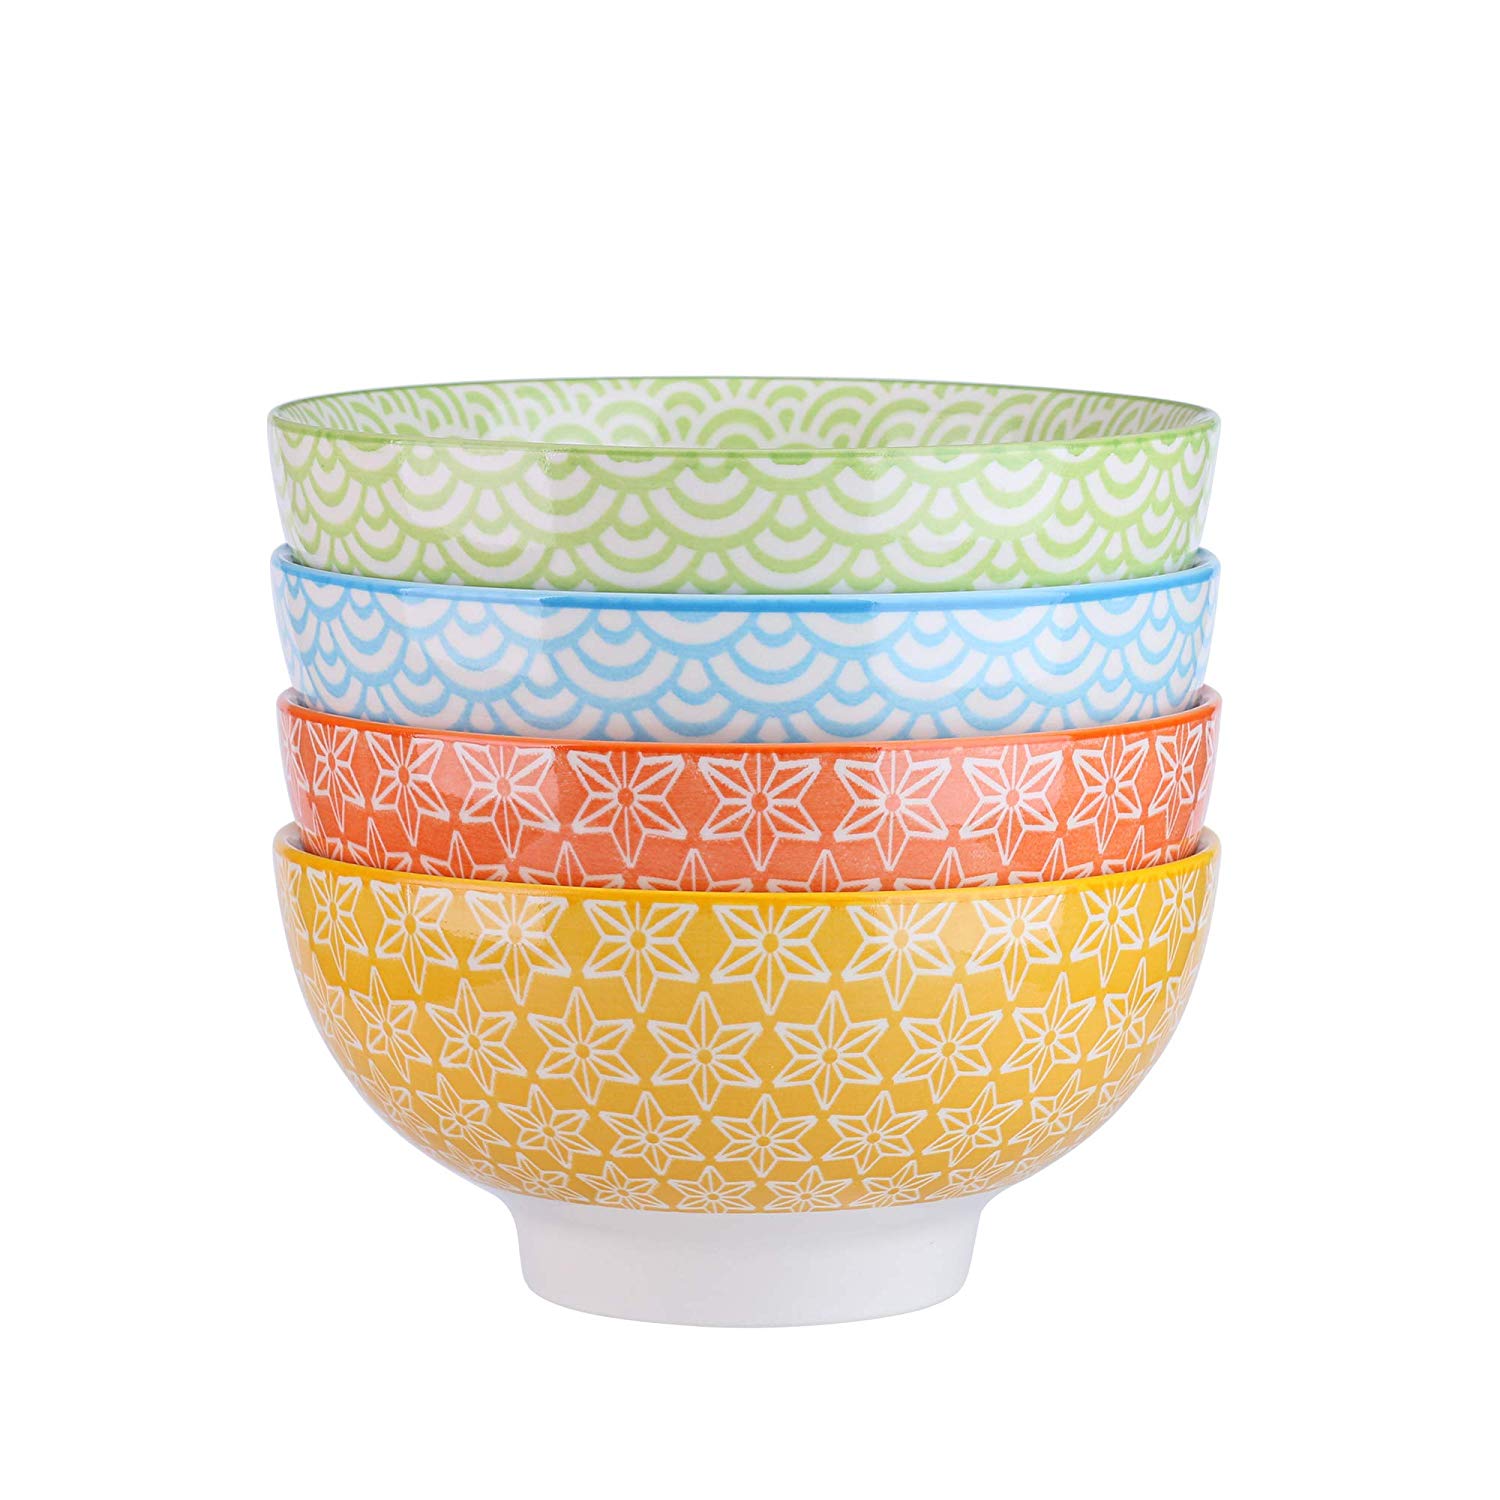 Vancasso Natsuki Set Of 4 Porcelain Bowls Set Diameter 6-Inch Cereal Bowls,